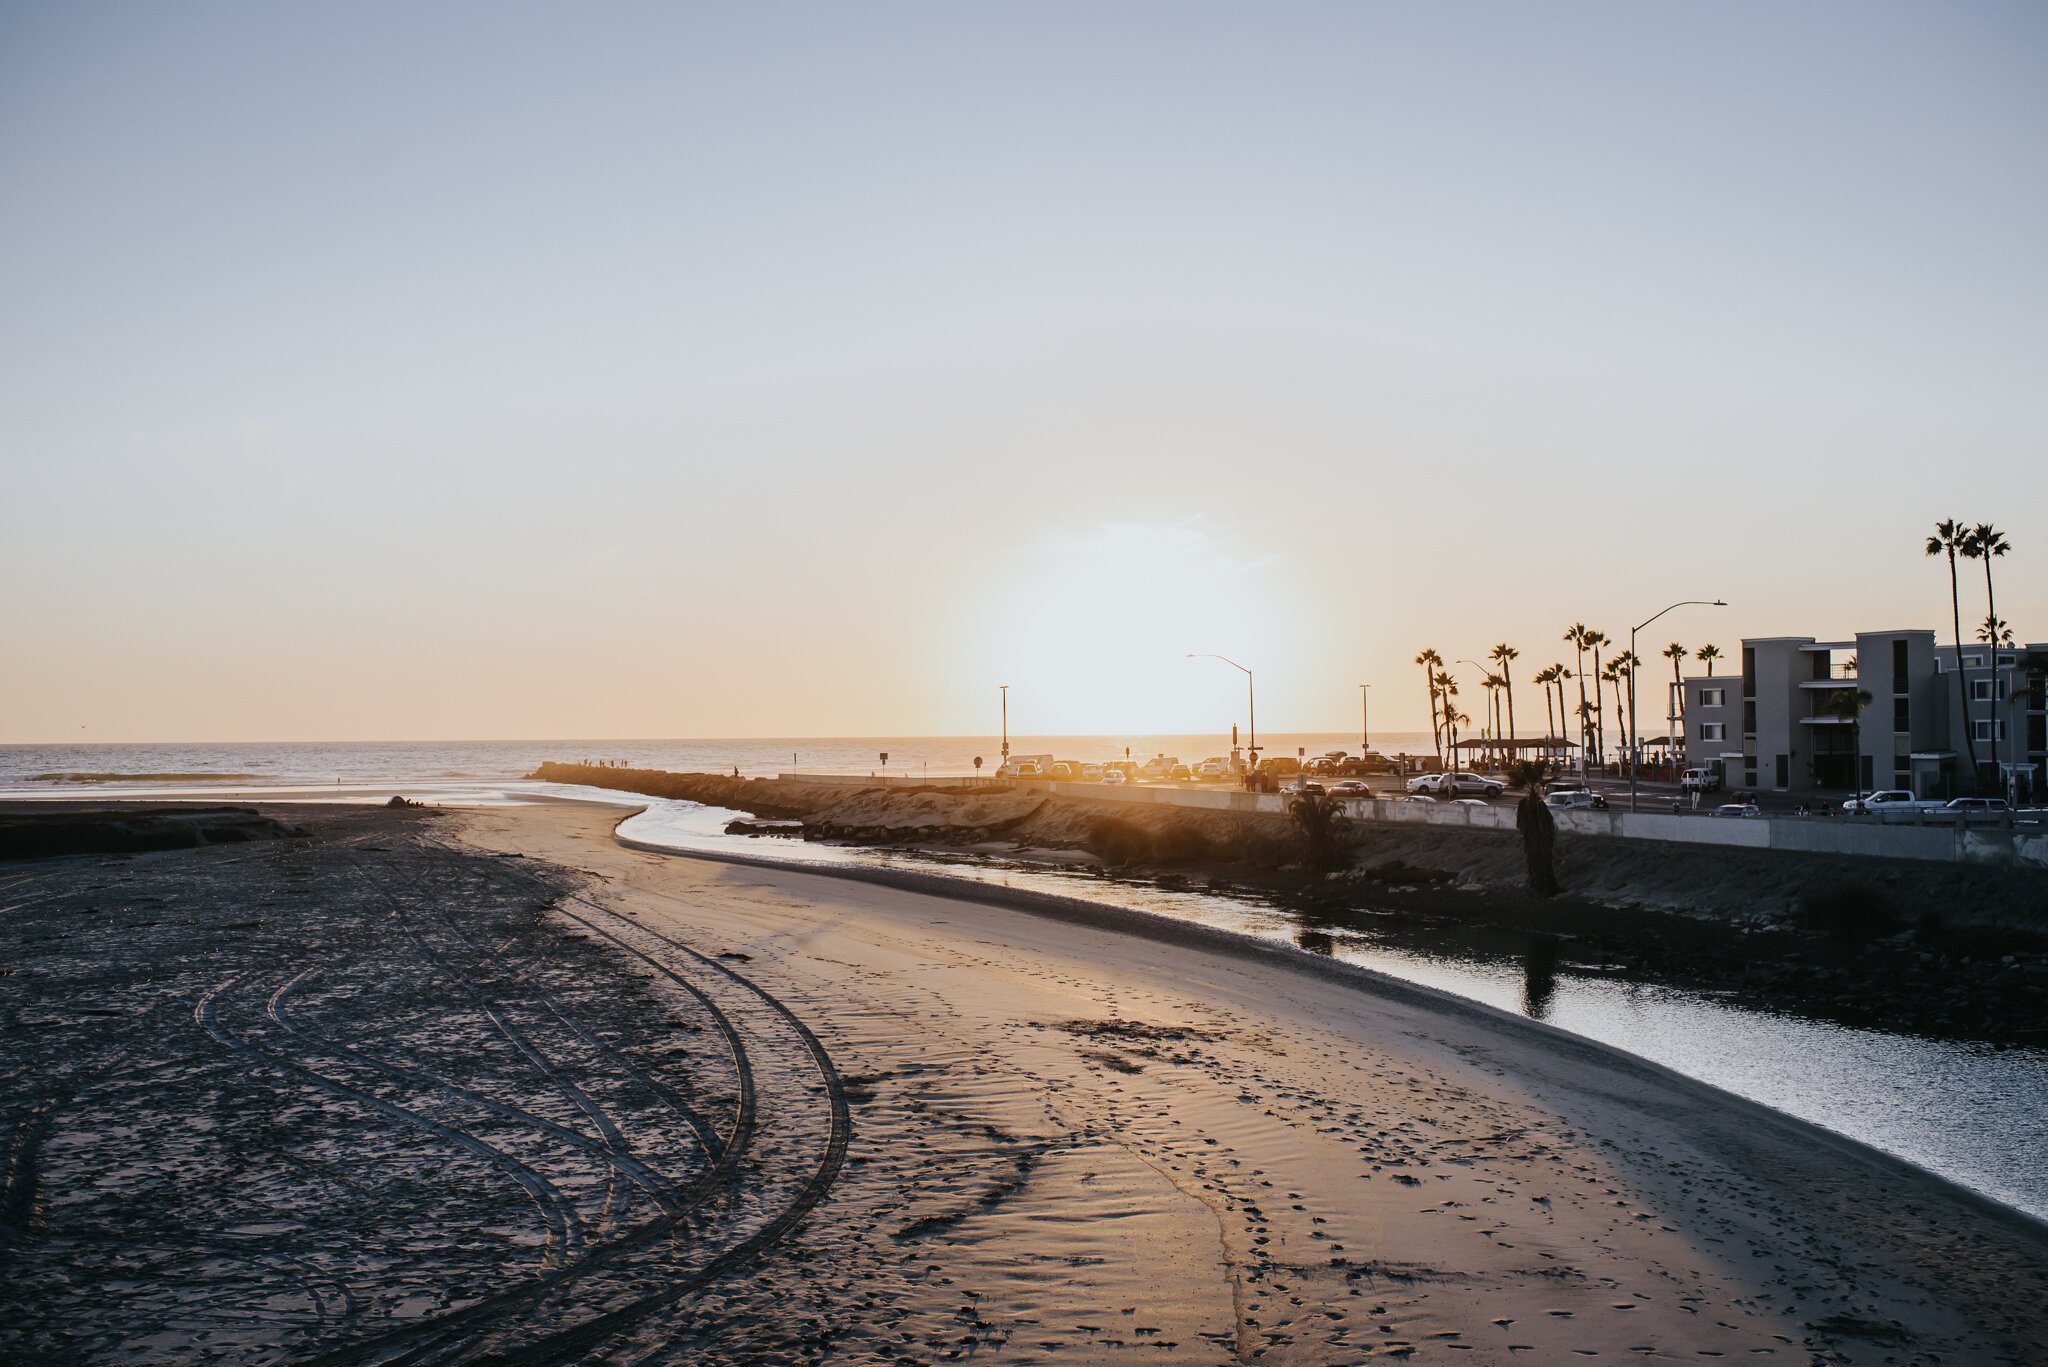 Street+Photography+Oceanside+California+Coast+Pier+Surfers+Fishing+Wild+Prairie+Photography-22-2019.jpeg